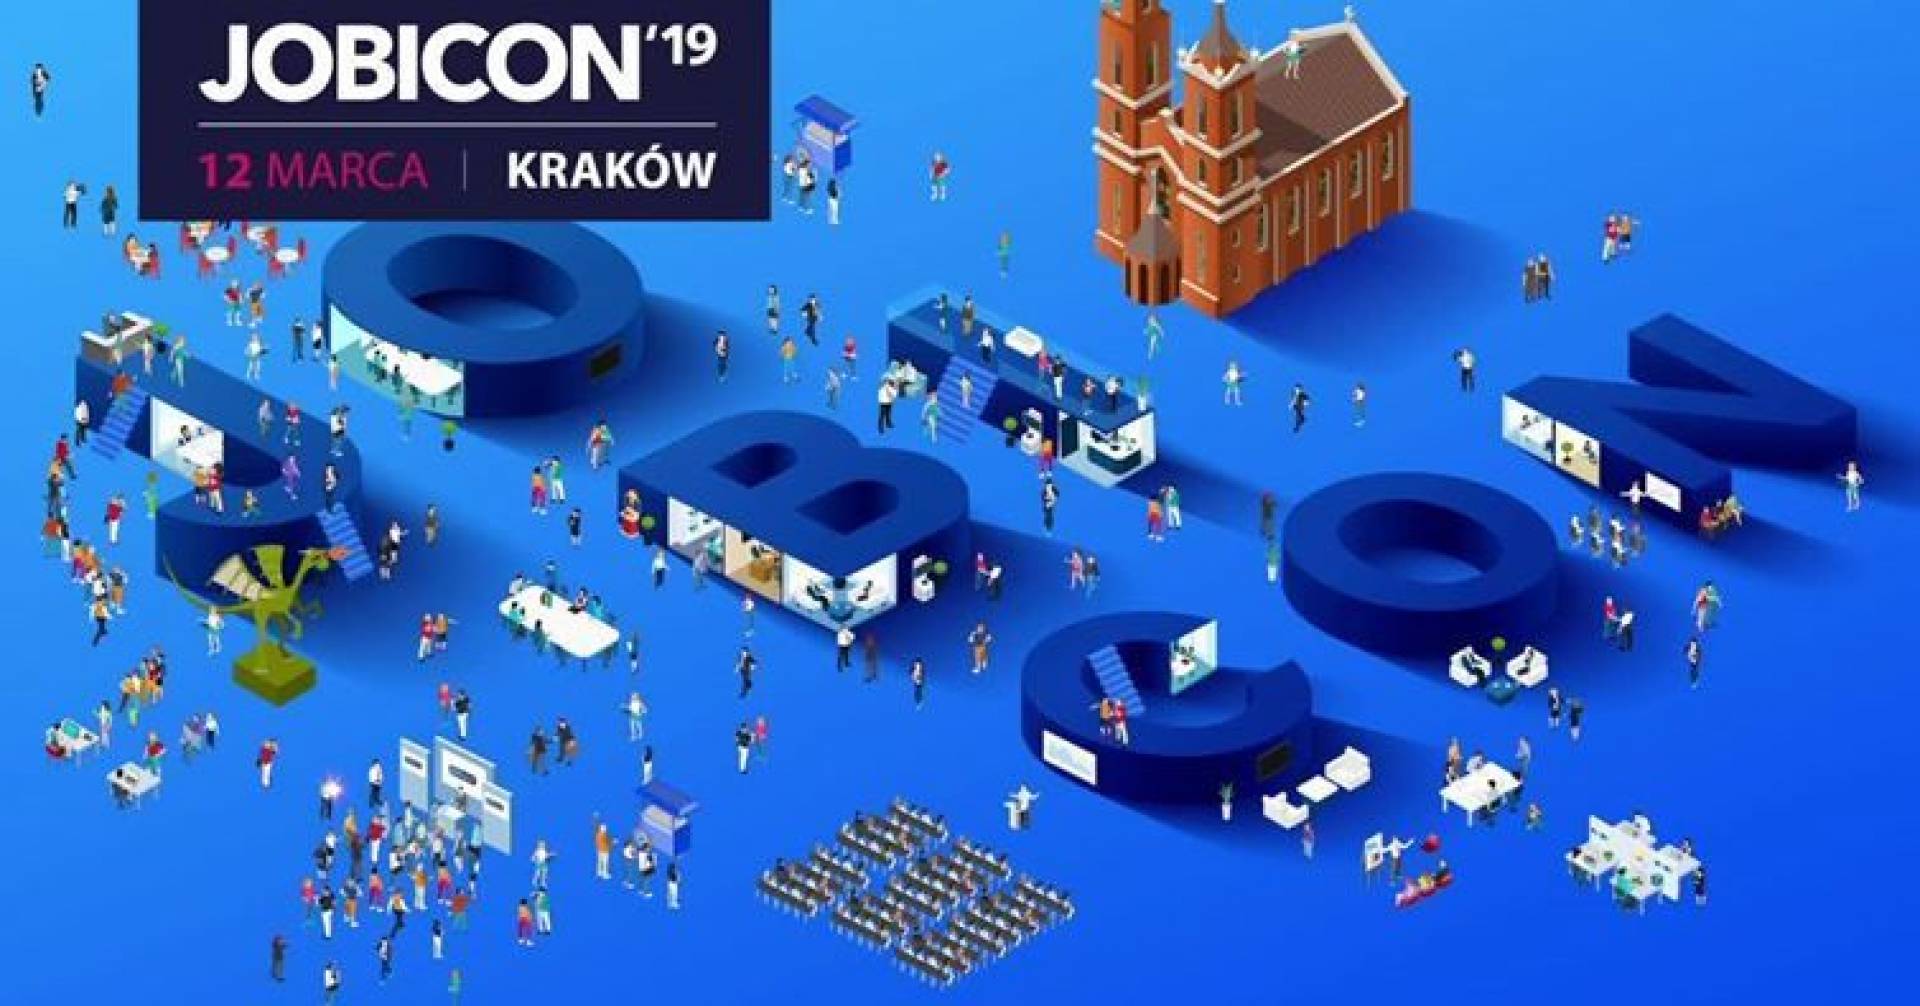 Festiwal Pracy Jobicon w Krakowie!